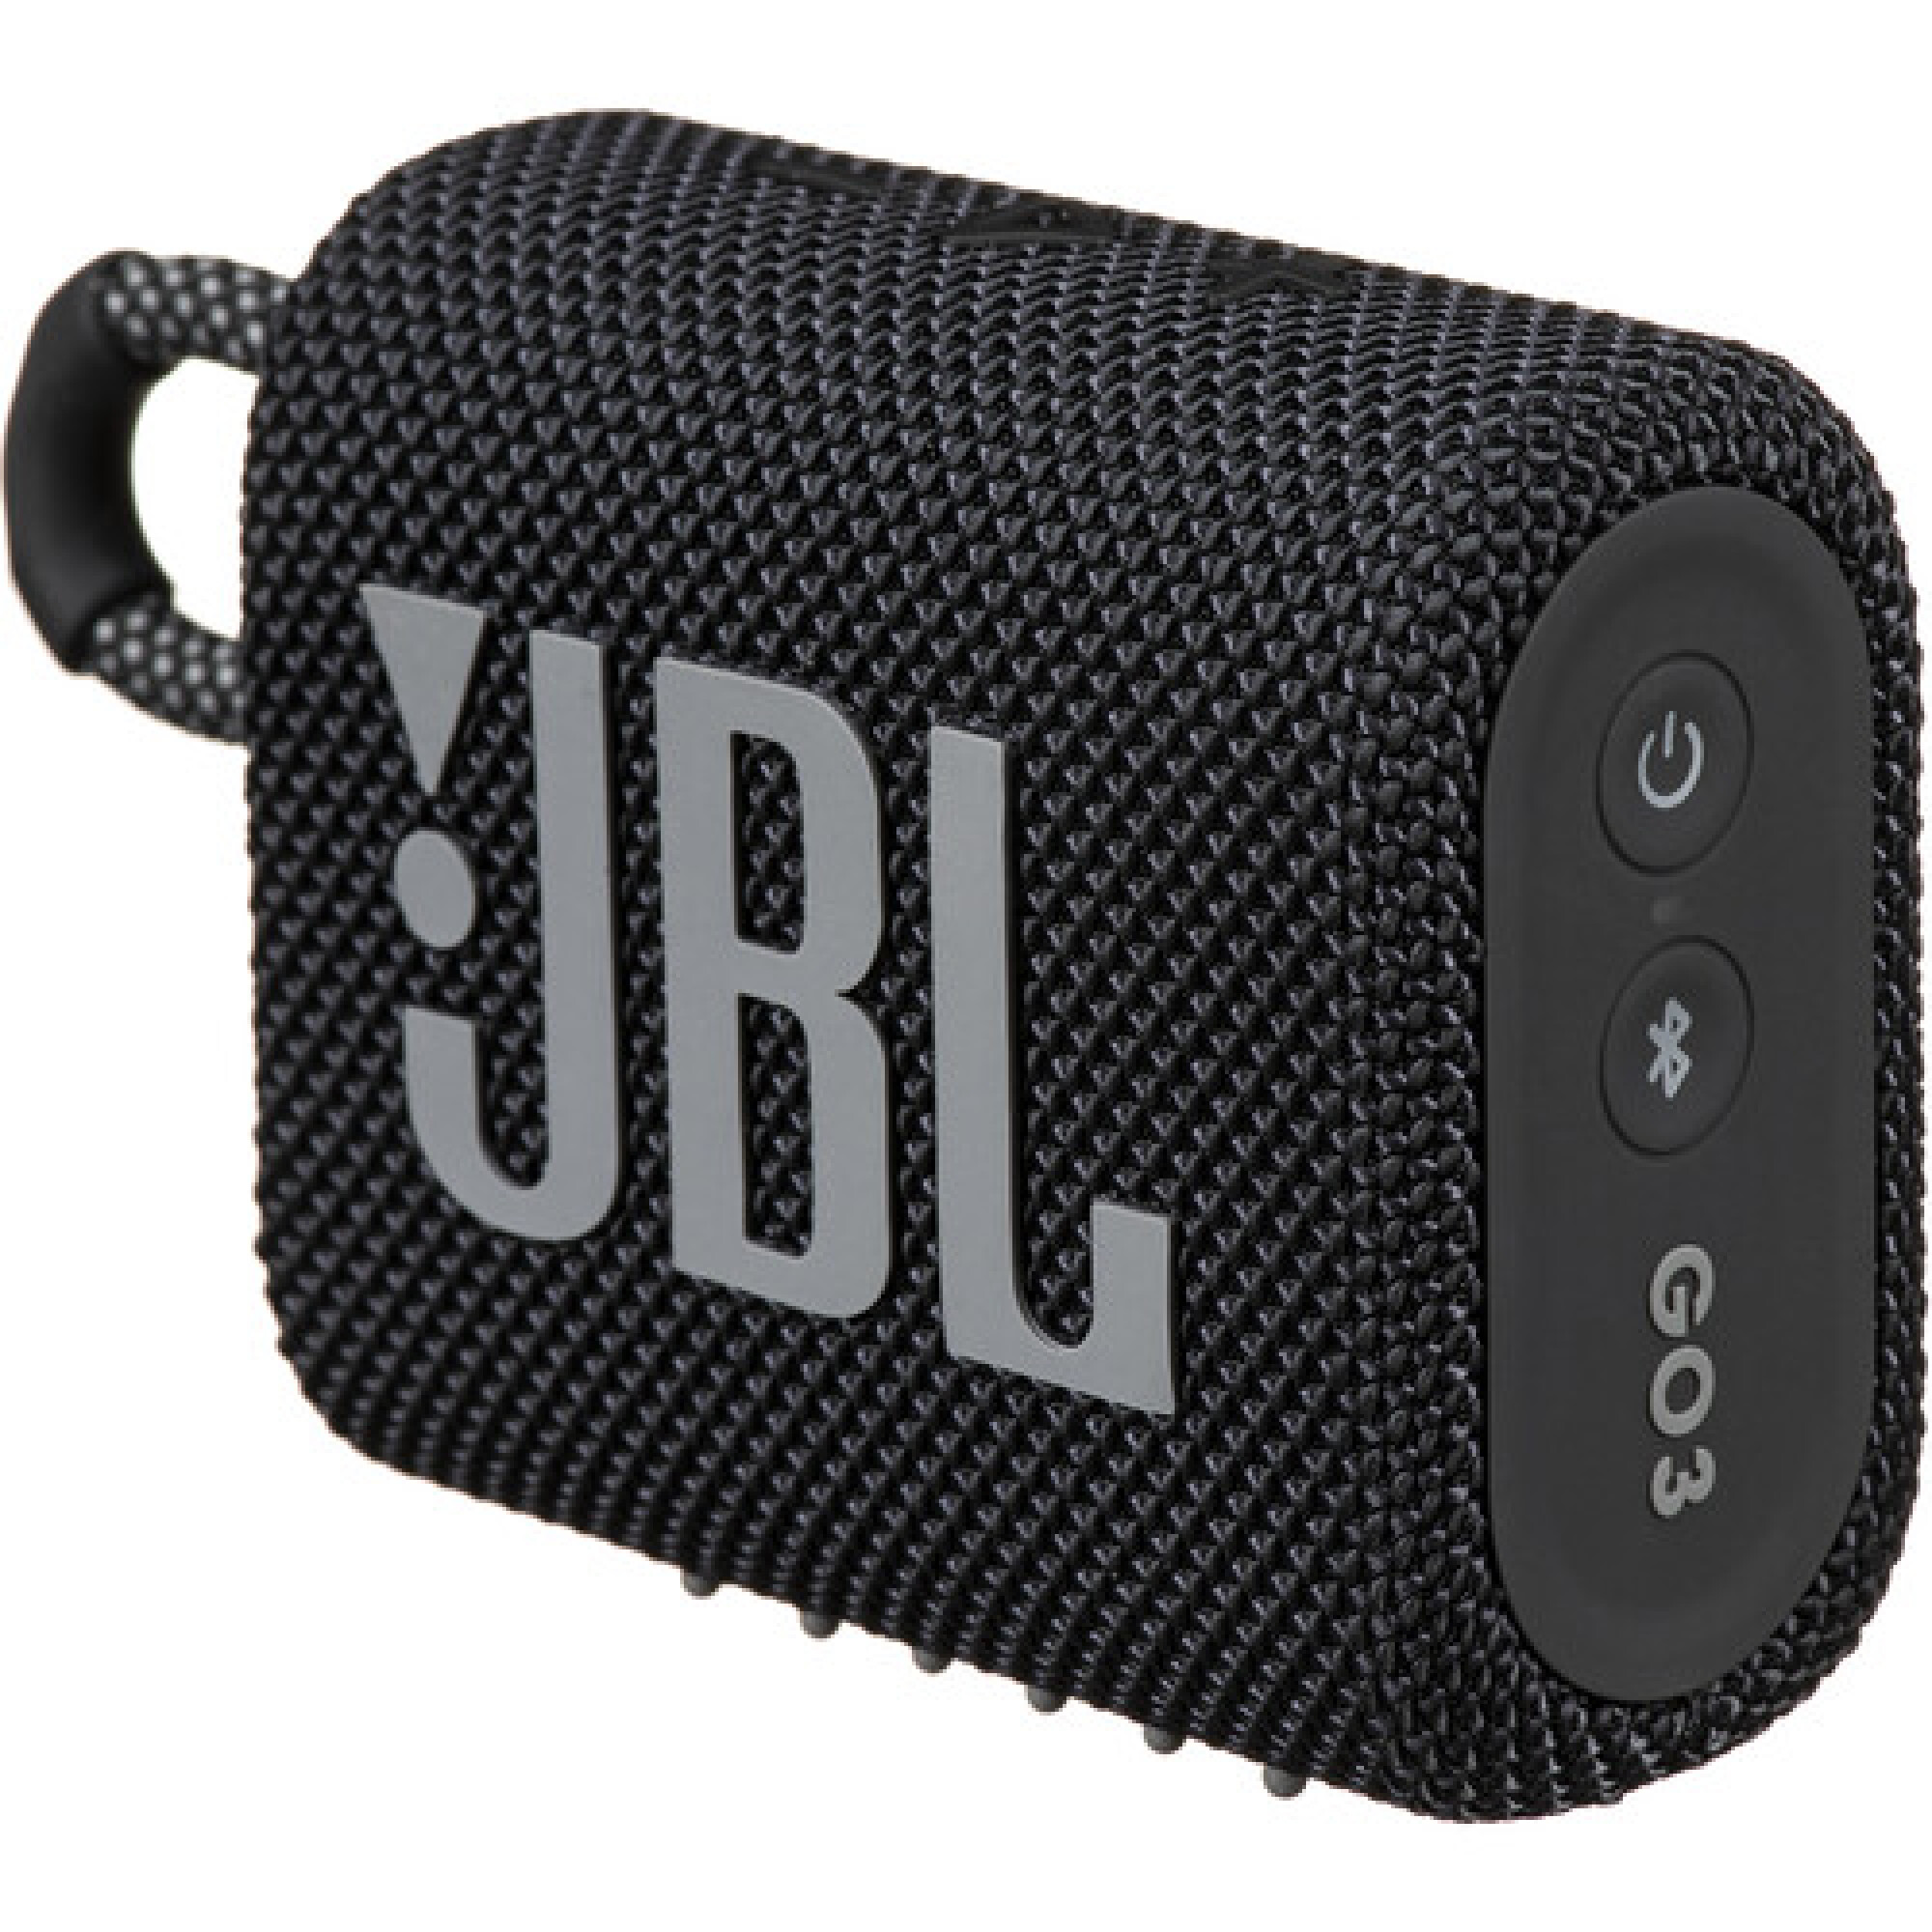 Altavoz Portátil JBL Go 3 con Bluetooth - Camuflaje